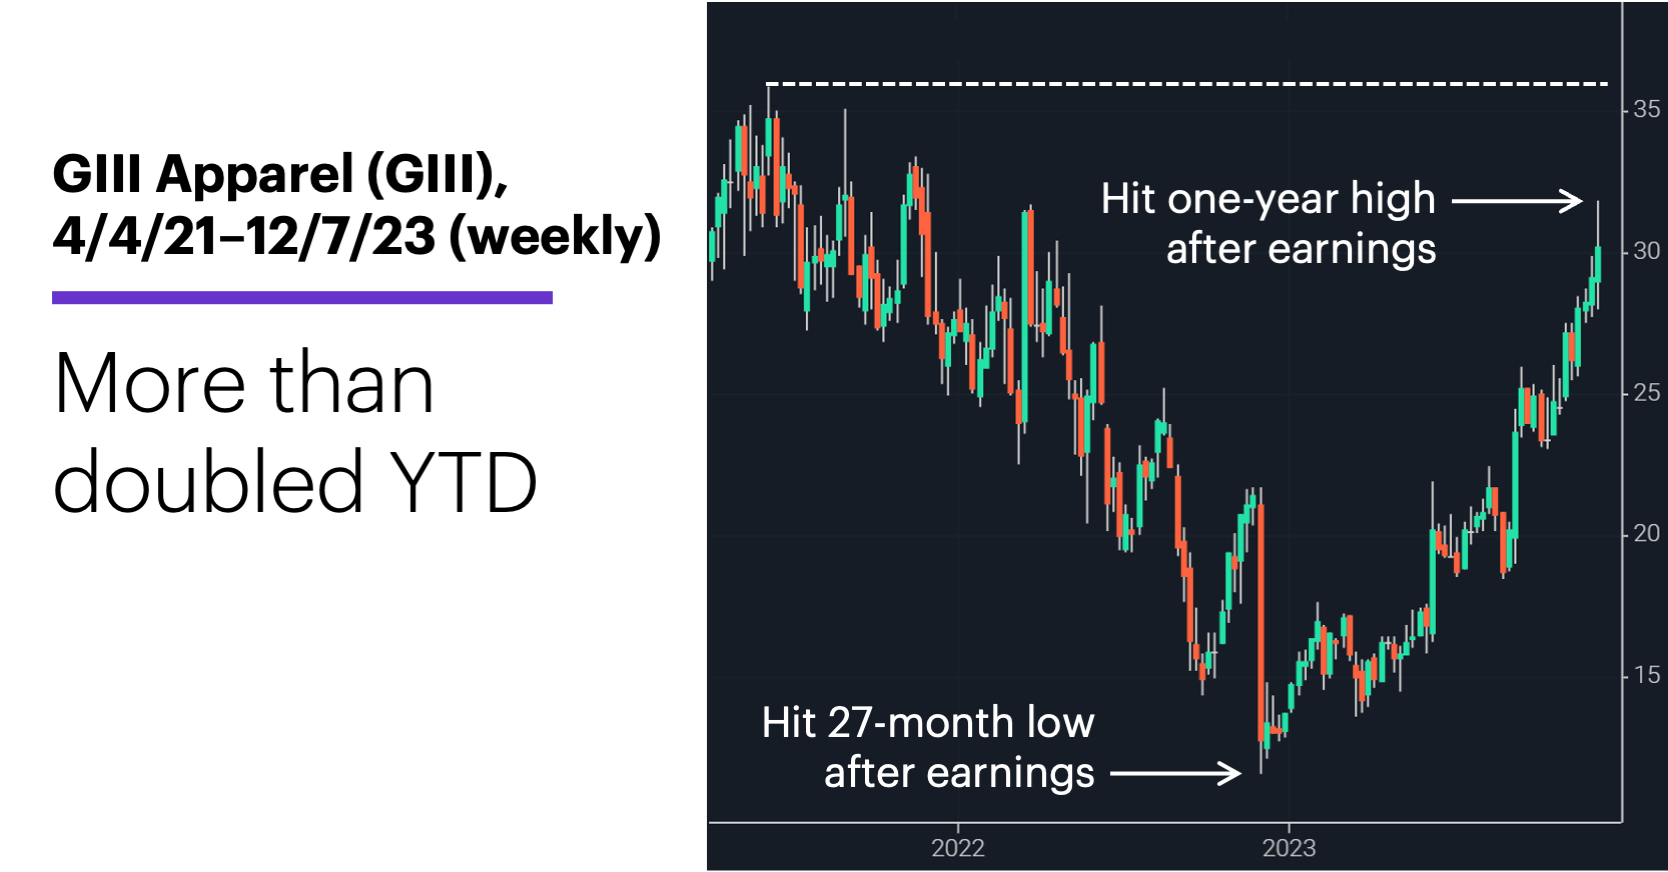 Chart 3: GIII Apparel (GIII), 4/4/21–12/7/23 (weekly). GIII Apparel (GIII) price chart. More than doubled YTD.